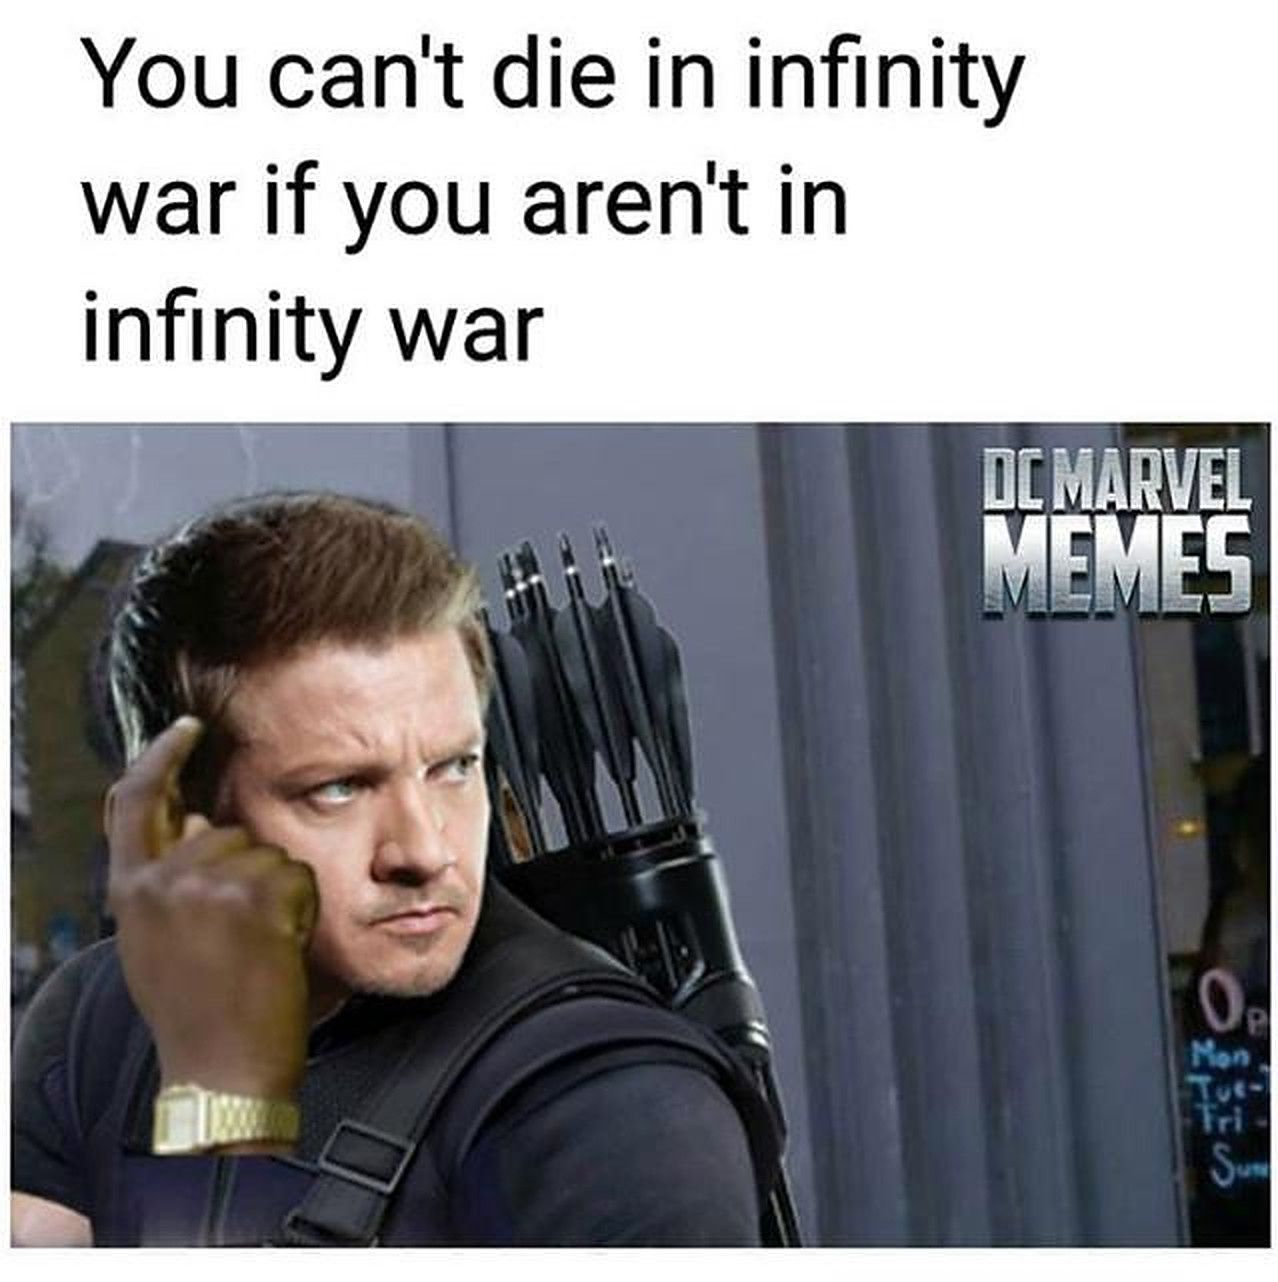 Hawkeye meme